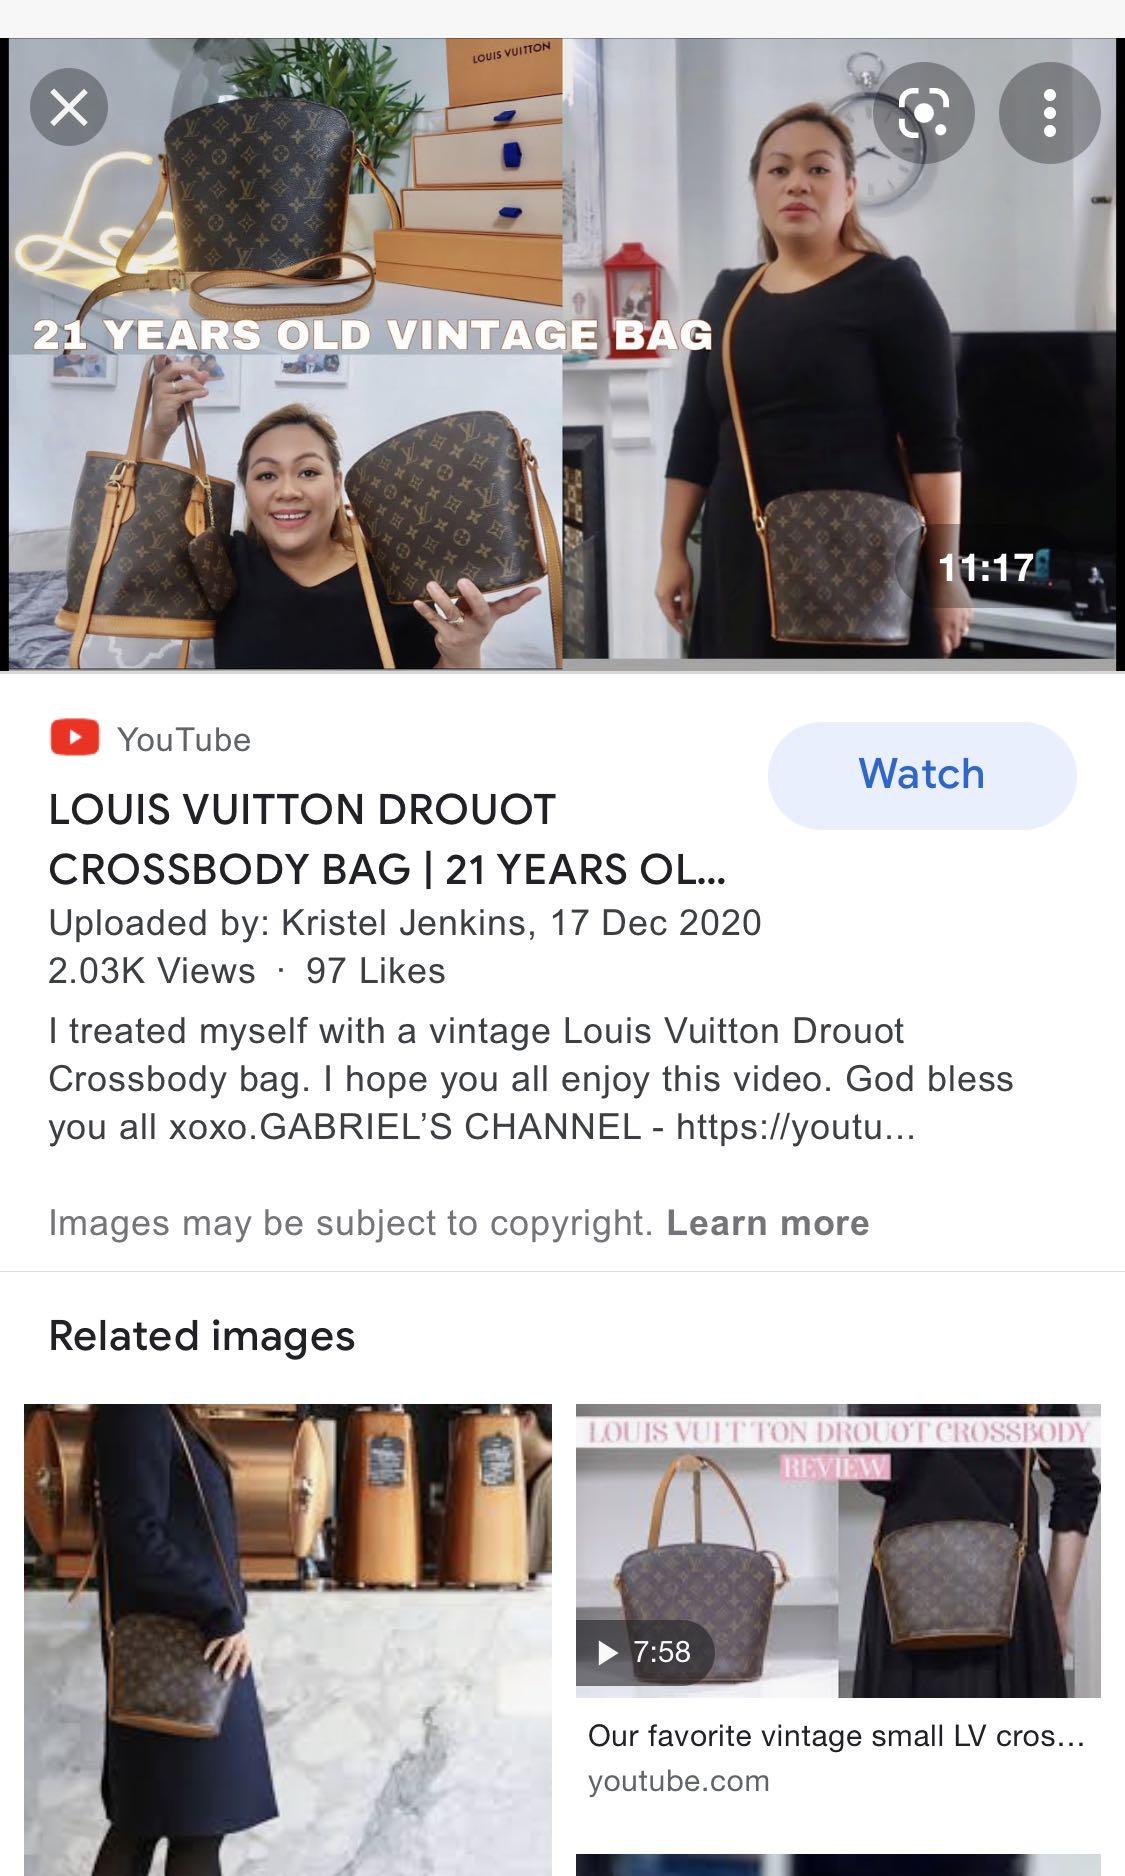 LOUIS VUITTON DROUOT CROSSBODY BAG  21 YEARS OLD VINTAGE BAG 